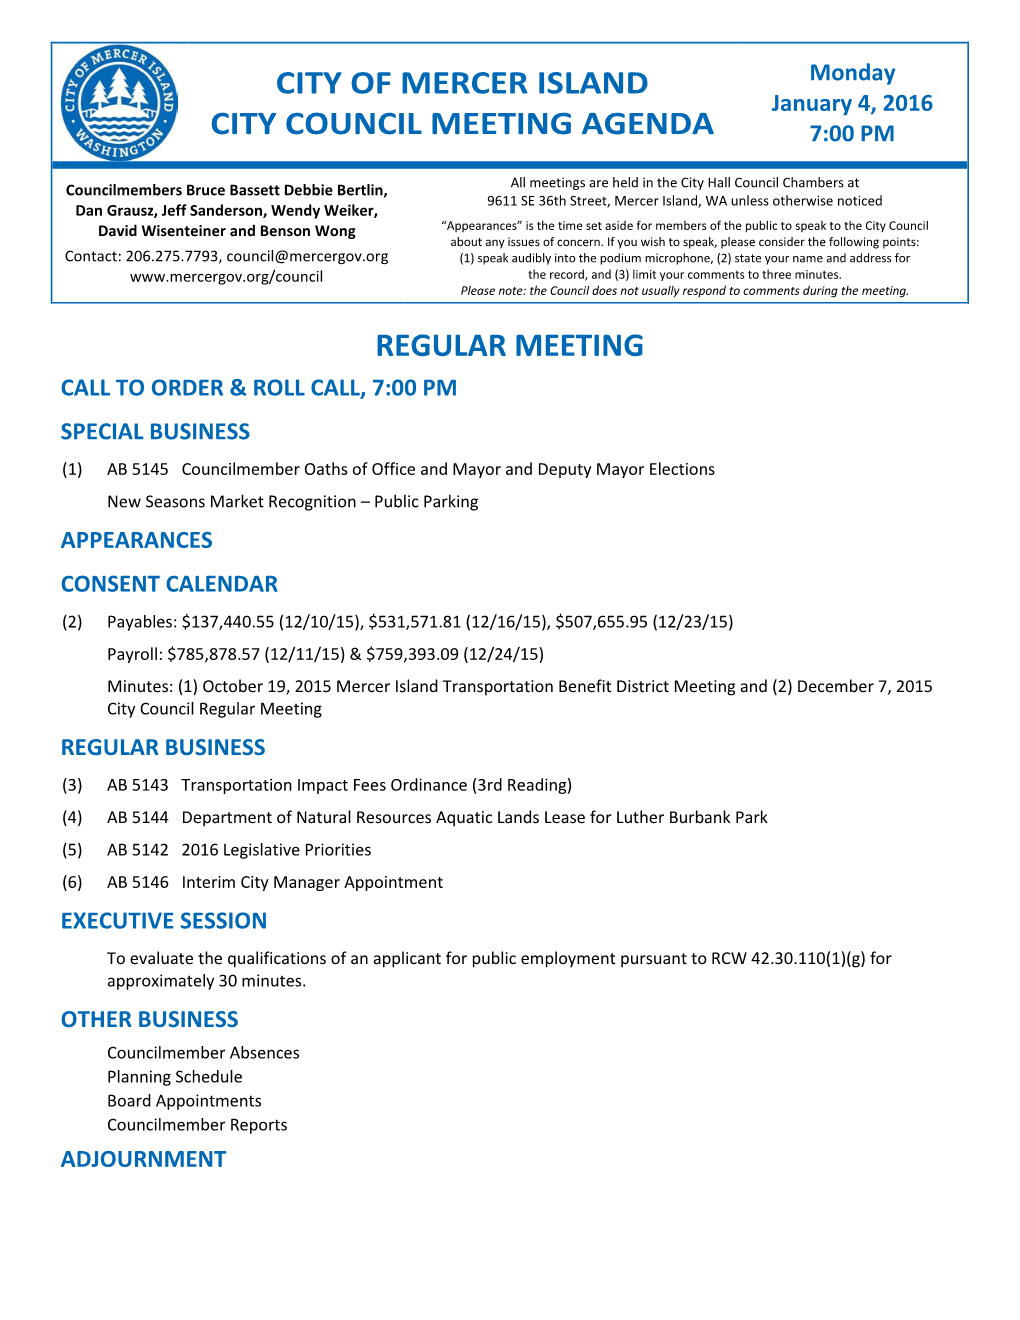 City of Mercer Island City Council Meeting Agenda Regular Meeting